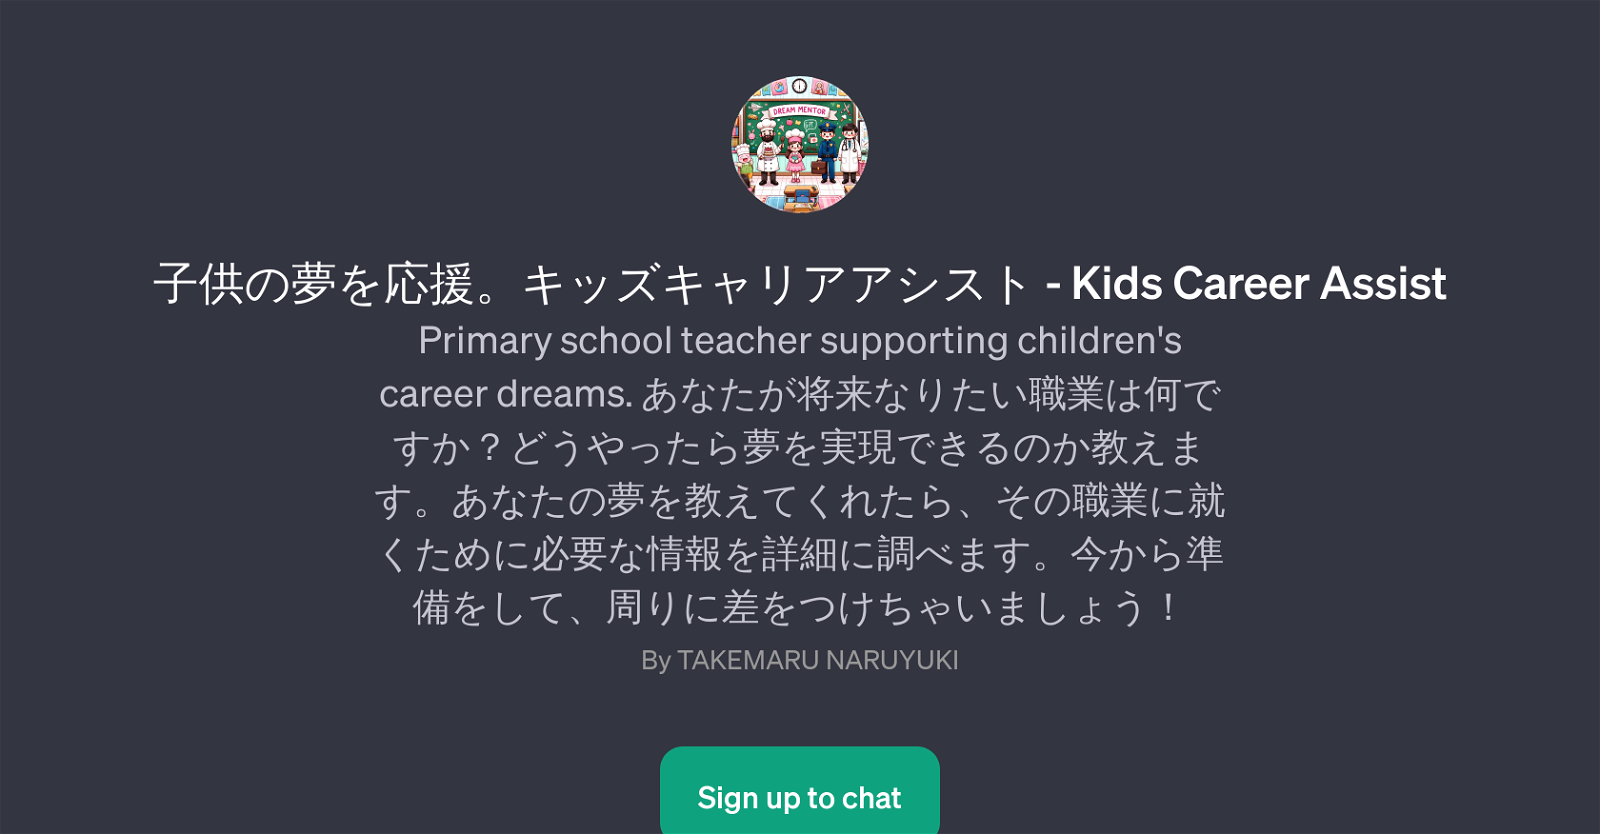 Kids Career Assist website